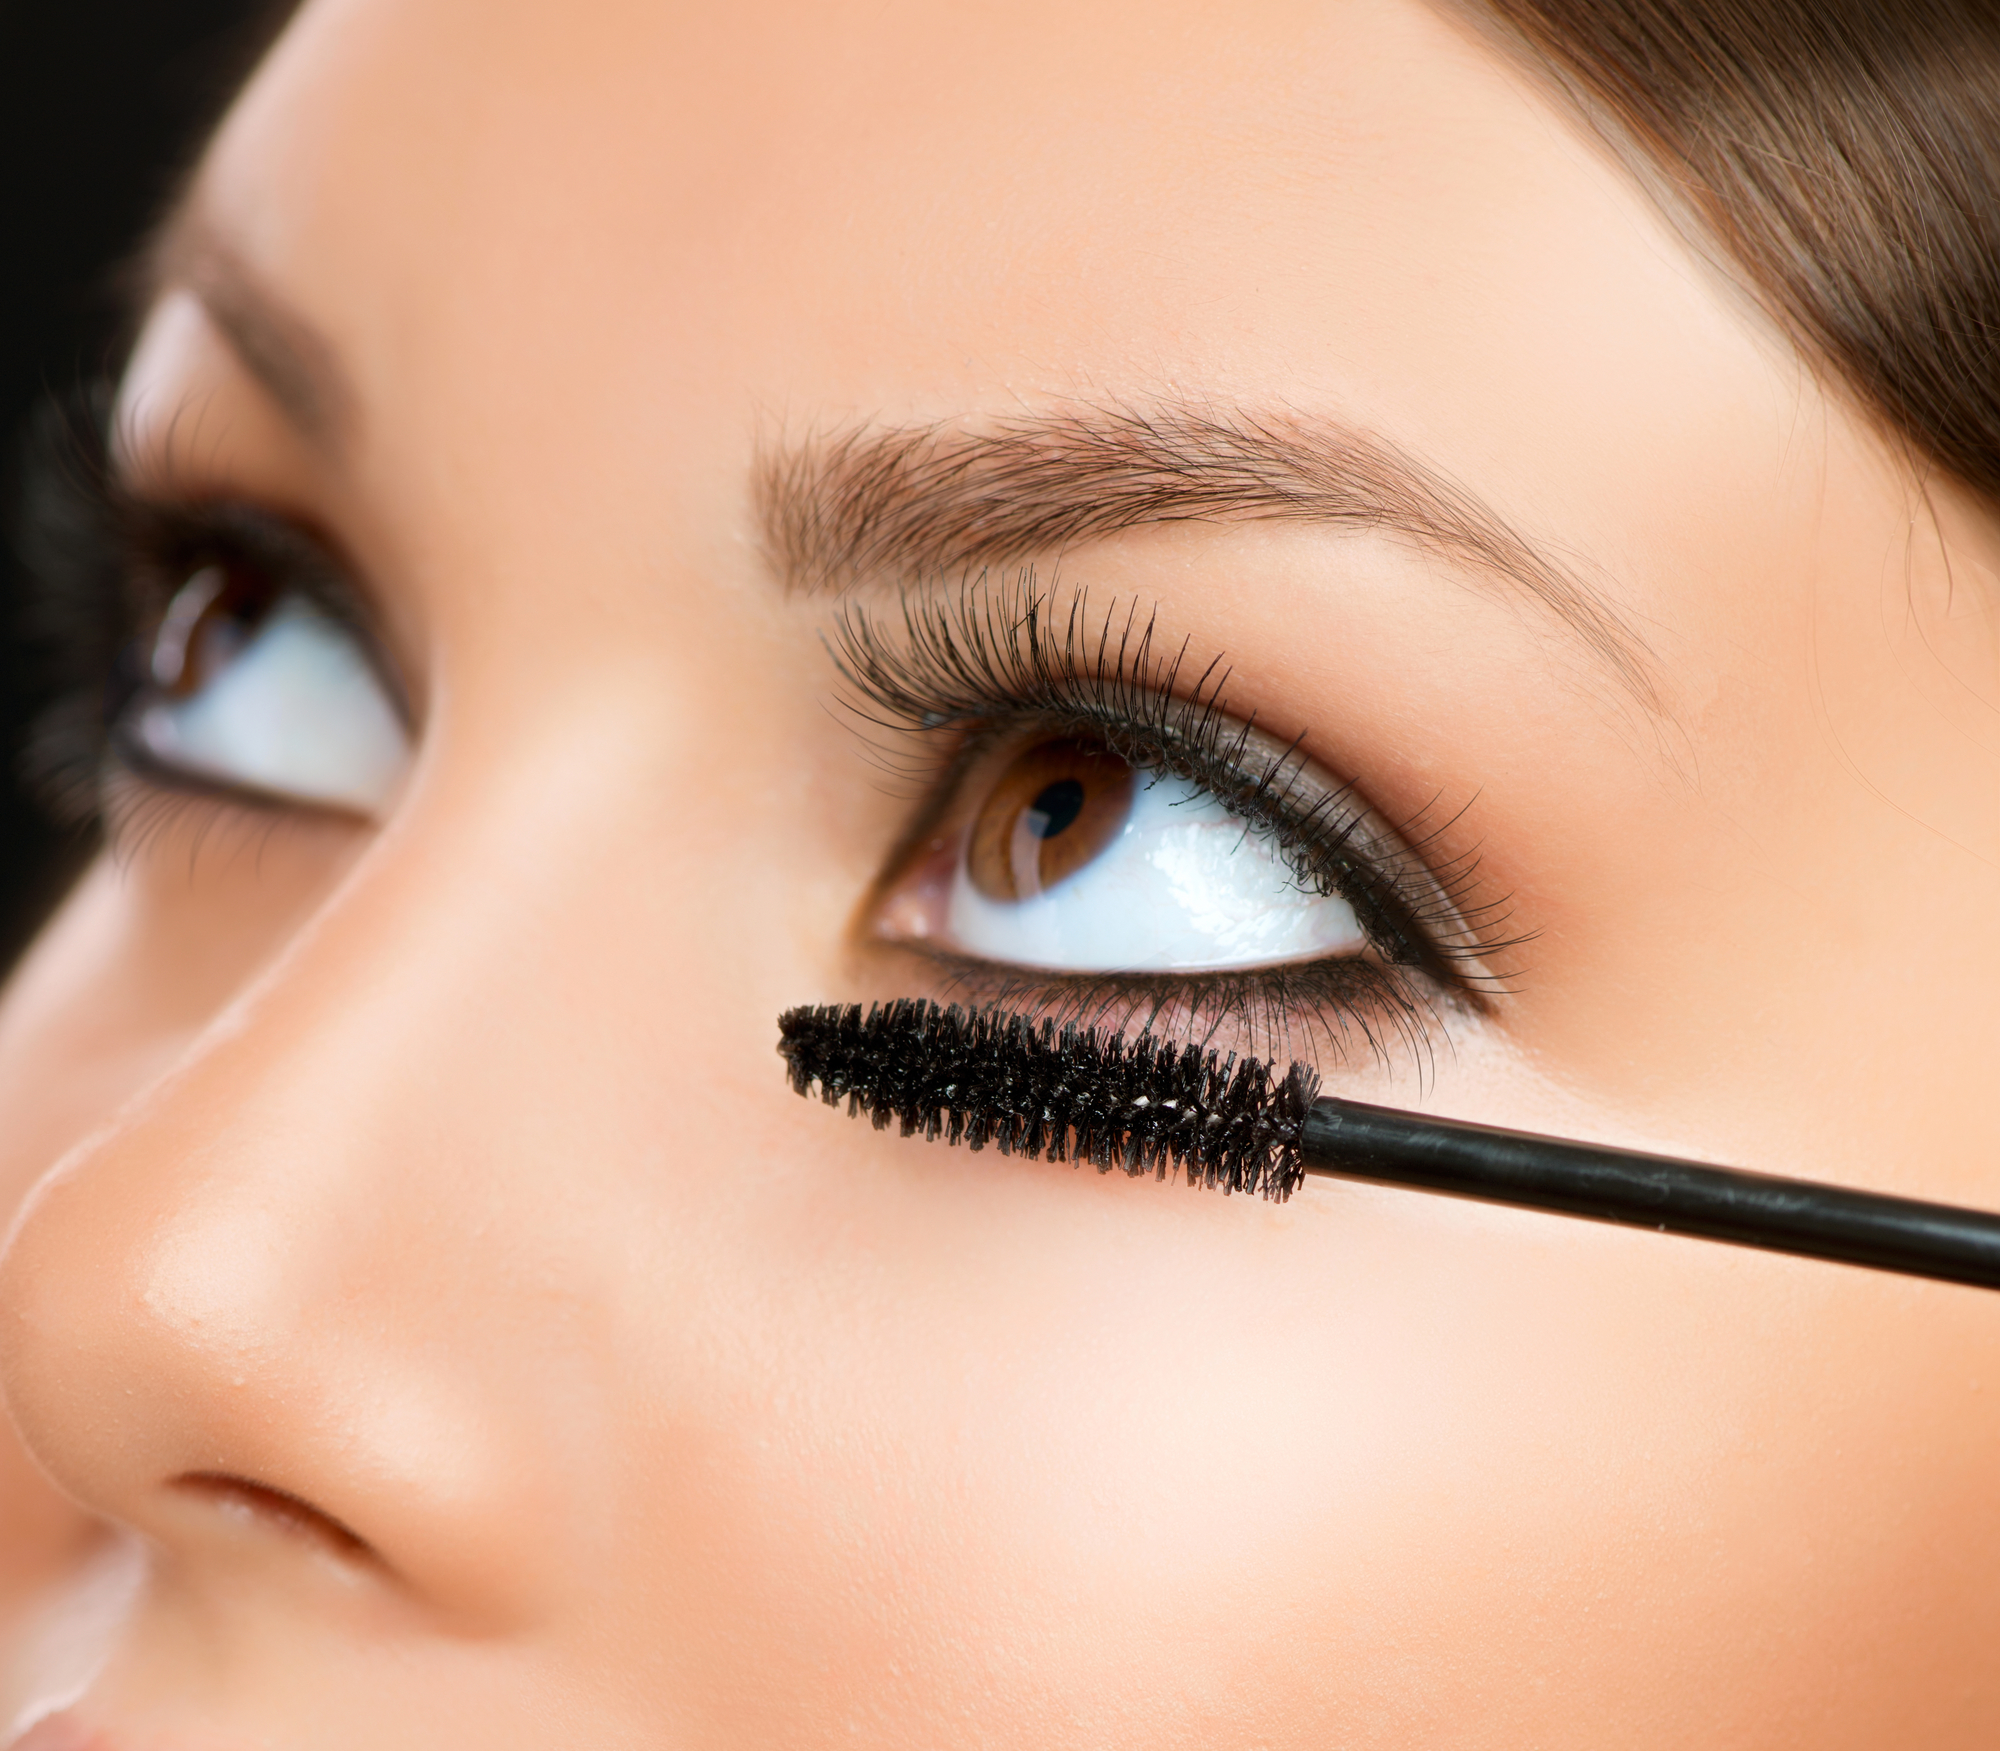 Mascara Applying. Makeup Closeup. Eyes Make-up